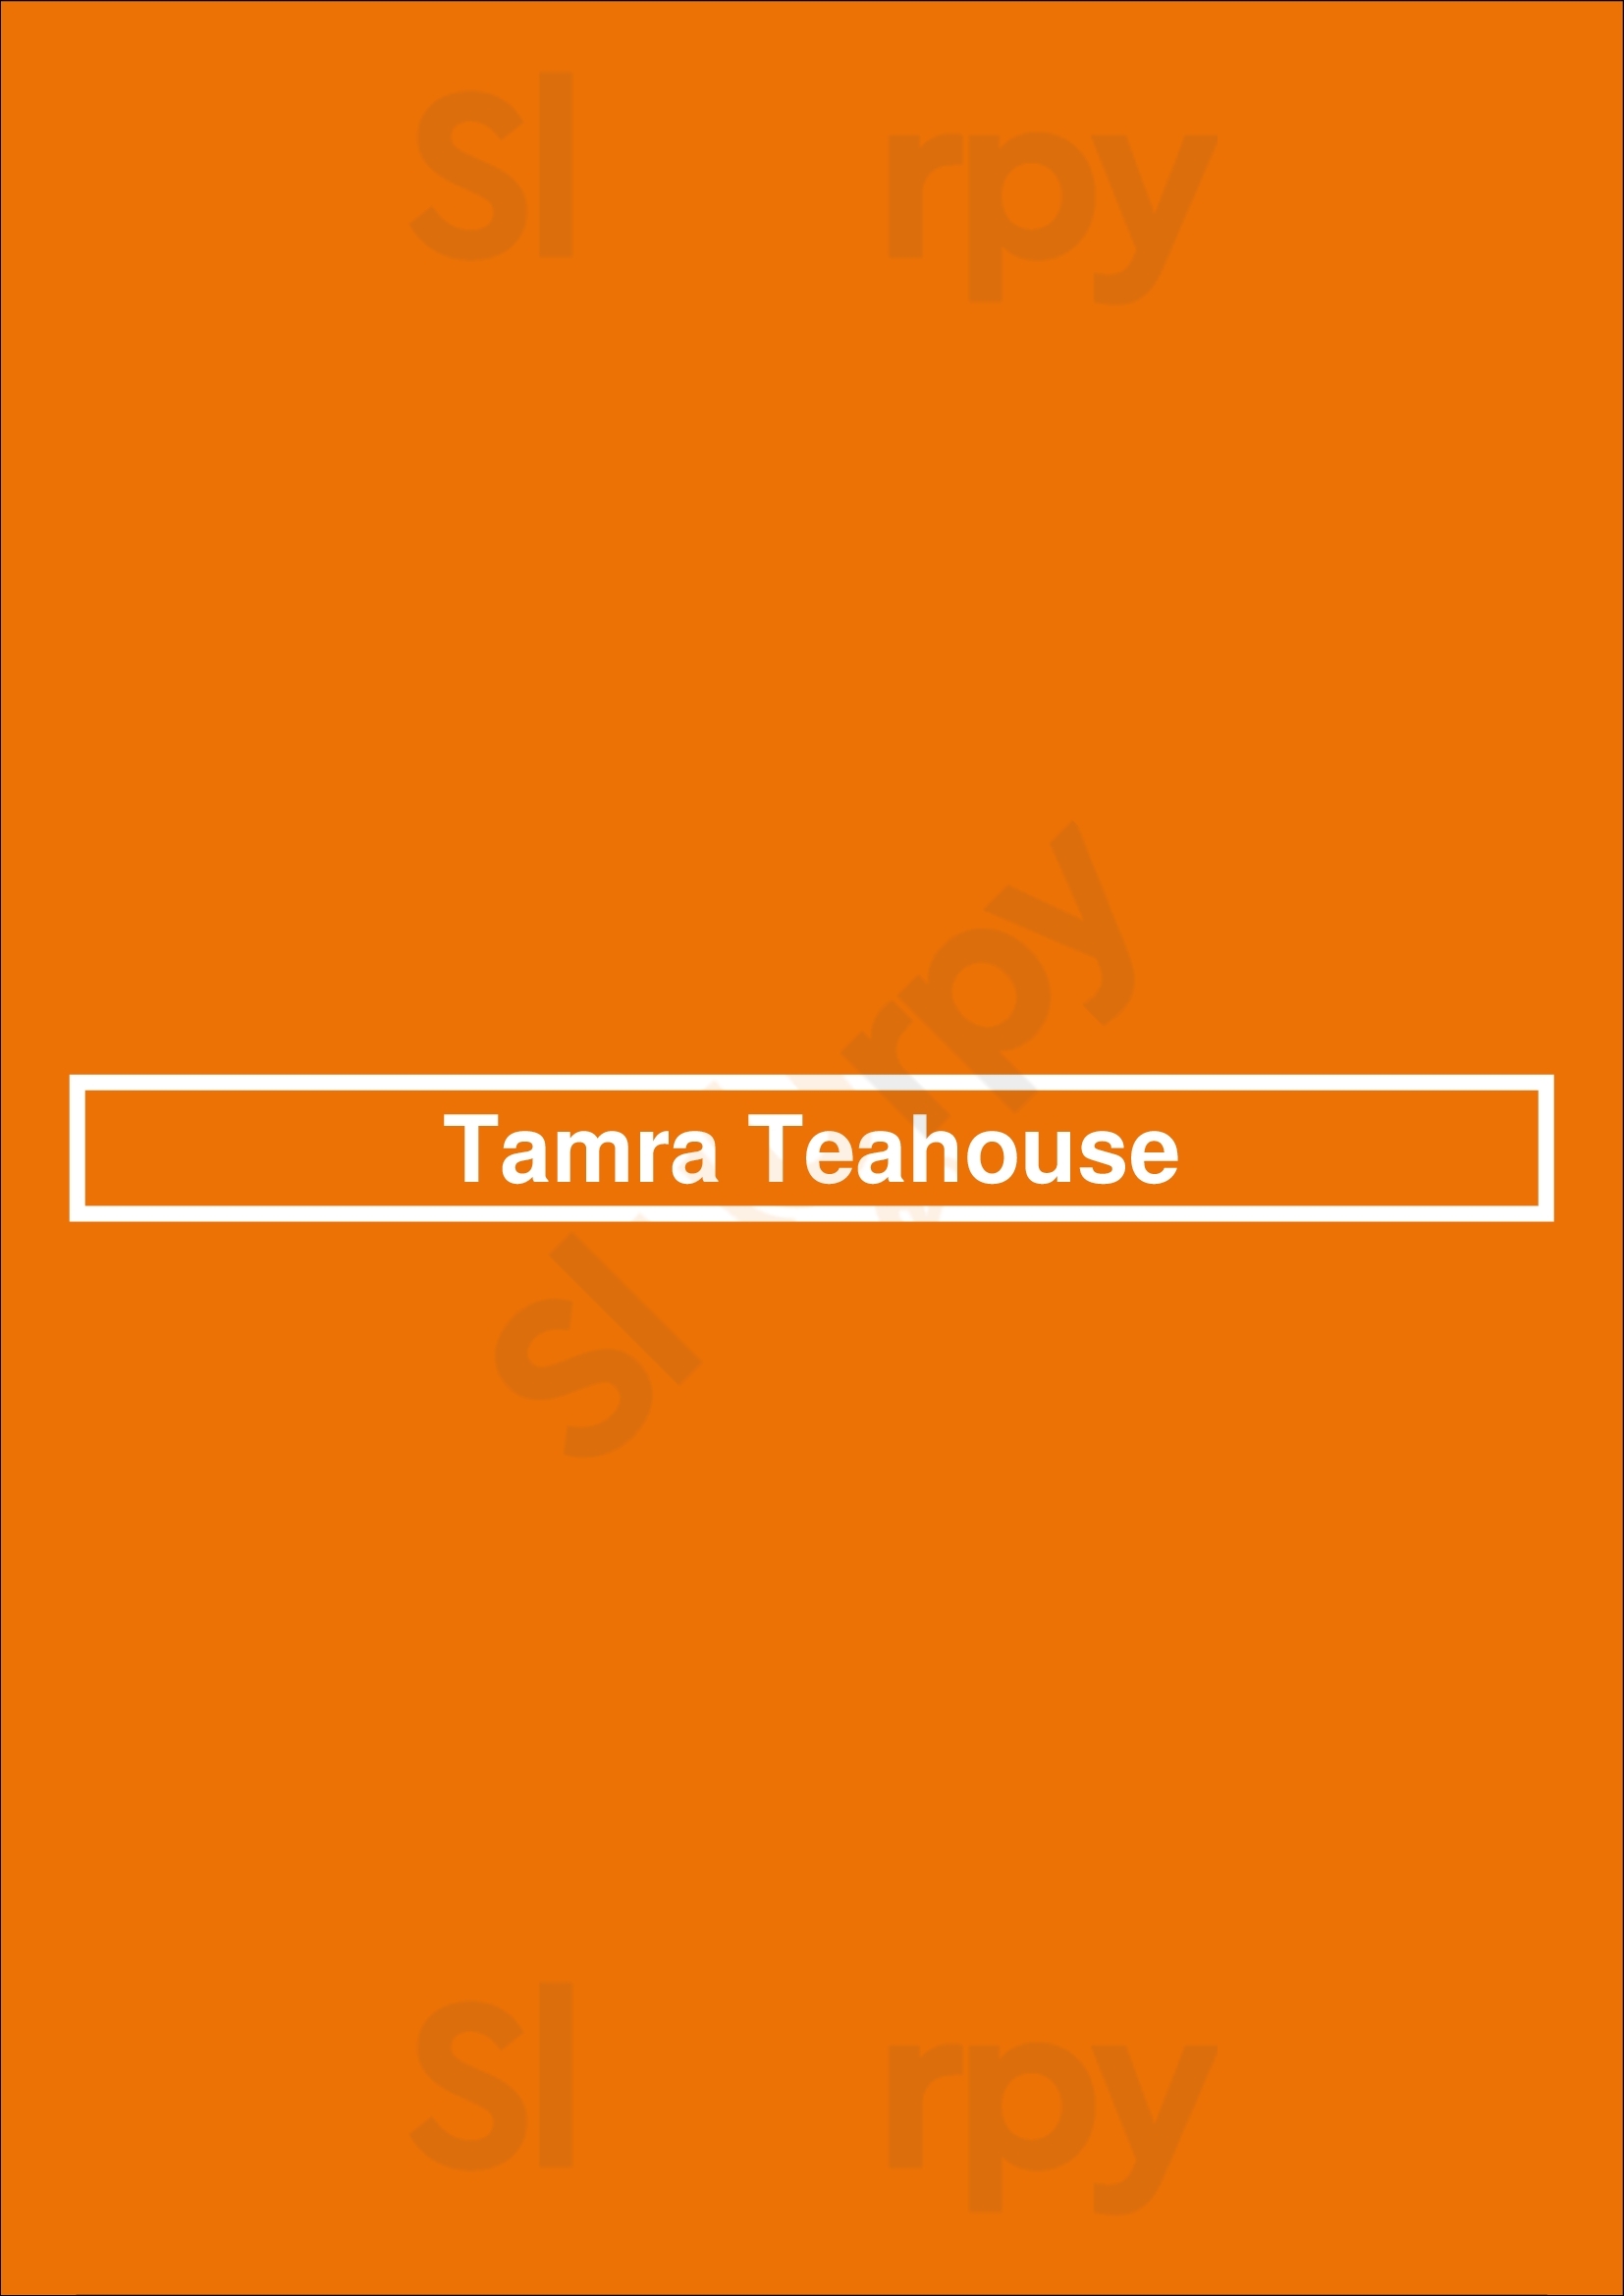 Tamra Teahouse Brooklyn Menu - 1